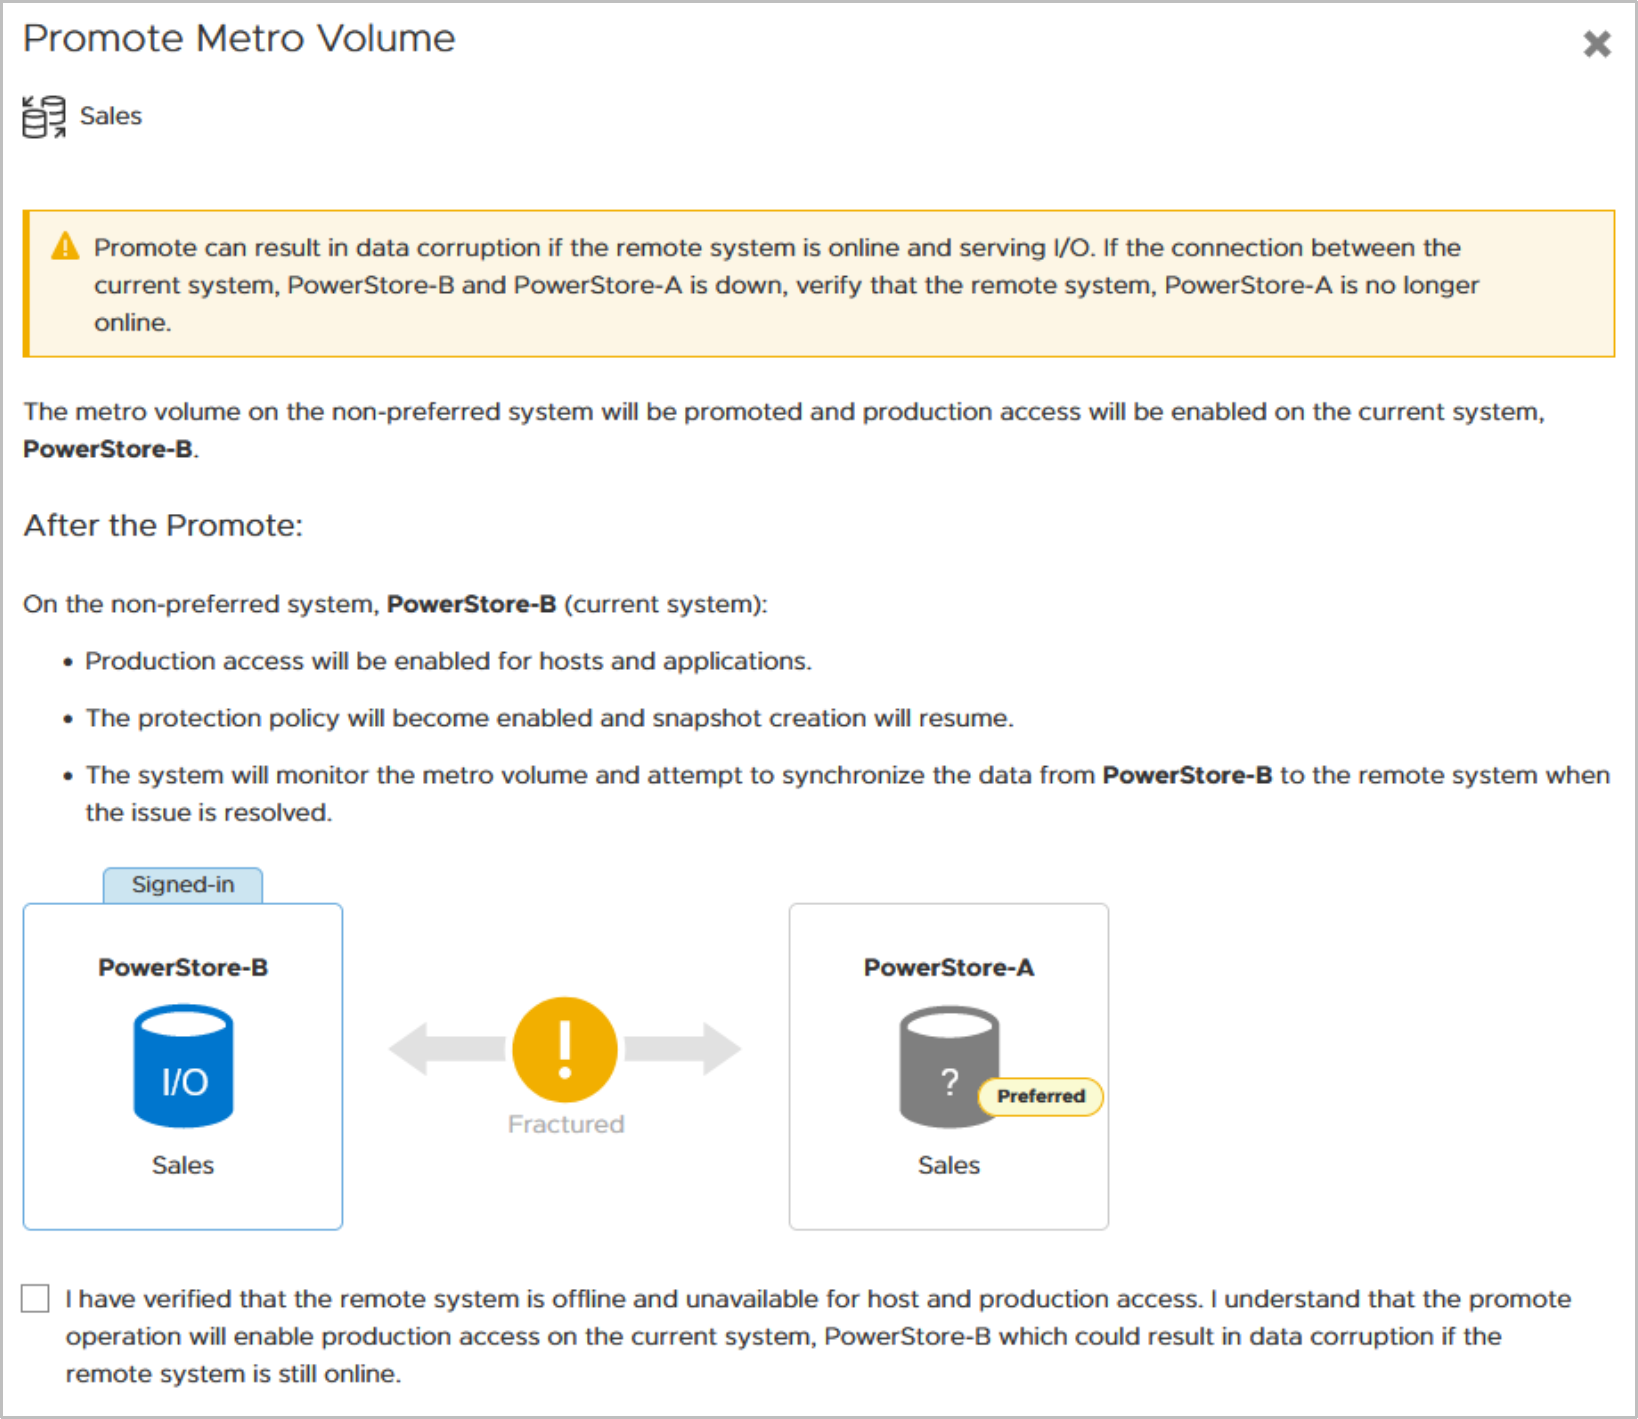 PowerStore Manager Promote Metro Volume summary